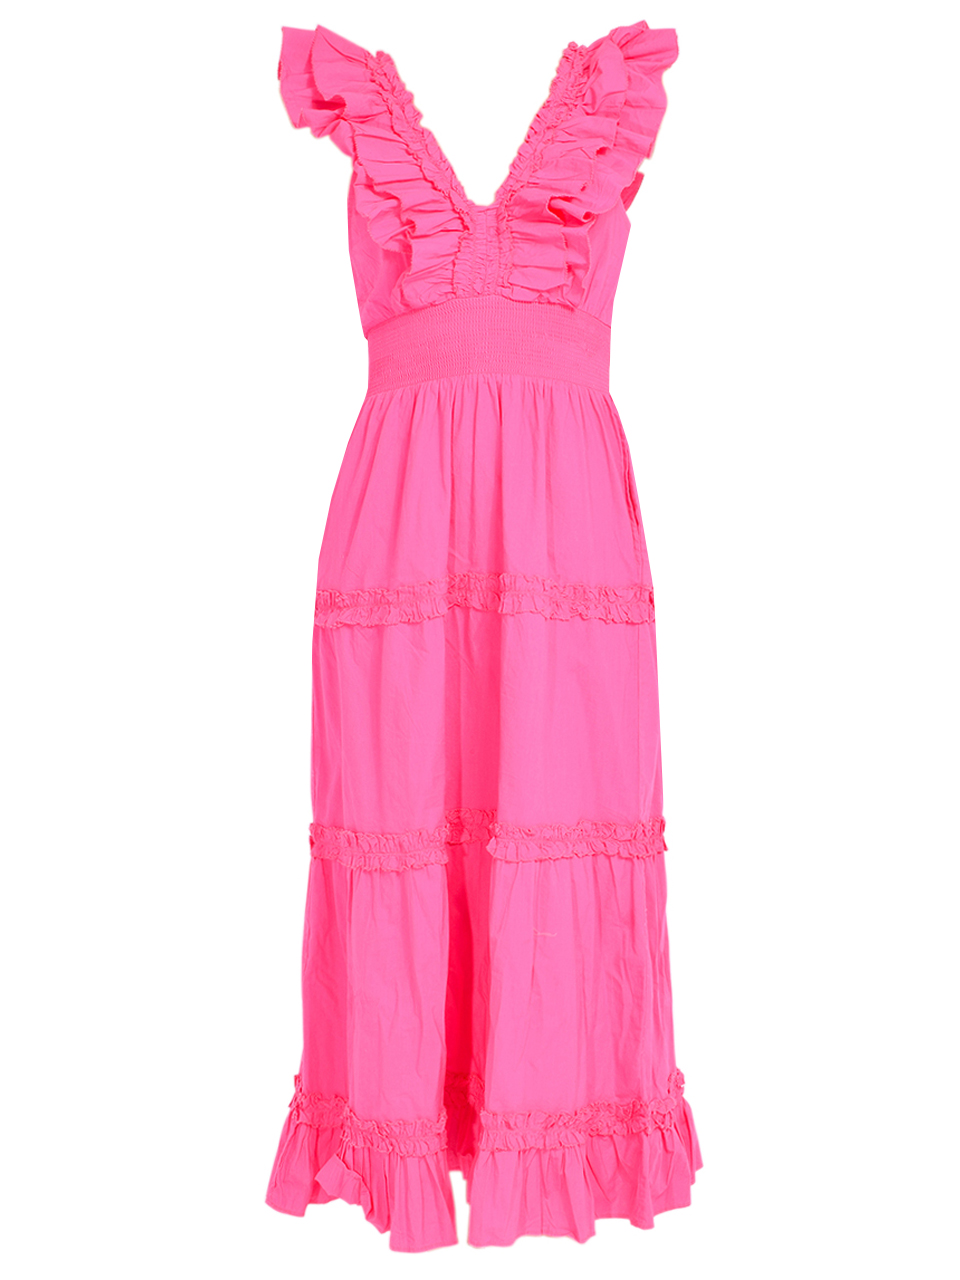 LOVE THE LABEL Azalea Dress in Hot Pink Product Shot 